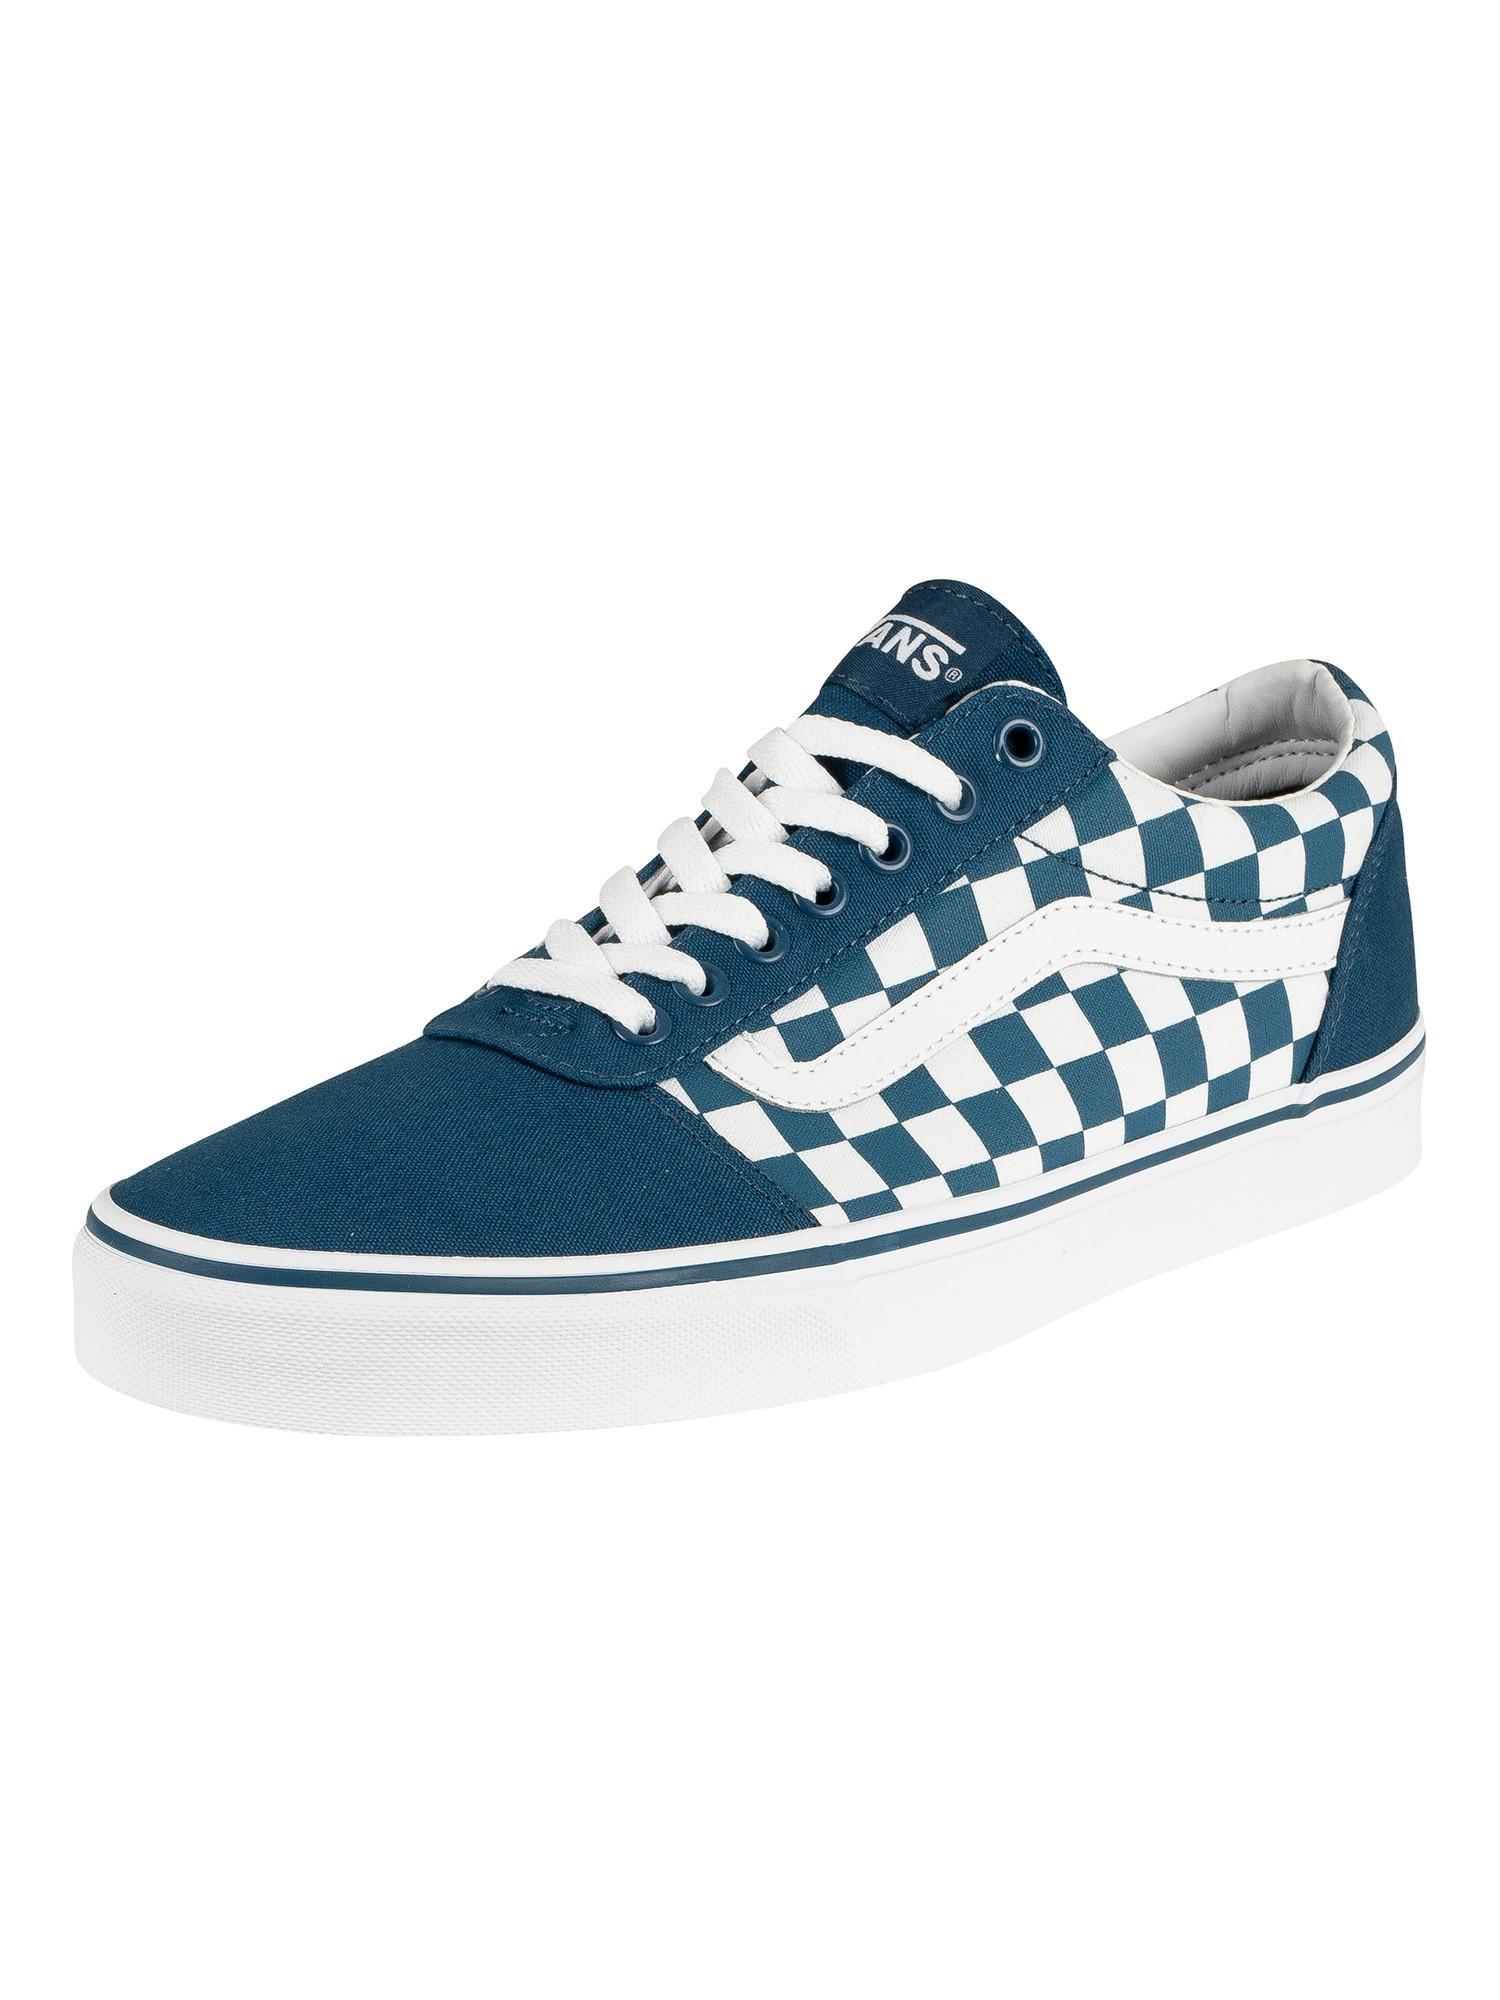 vans ward checkerboard blue